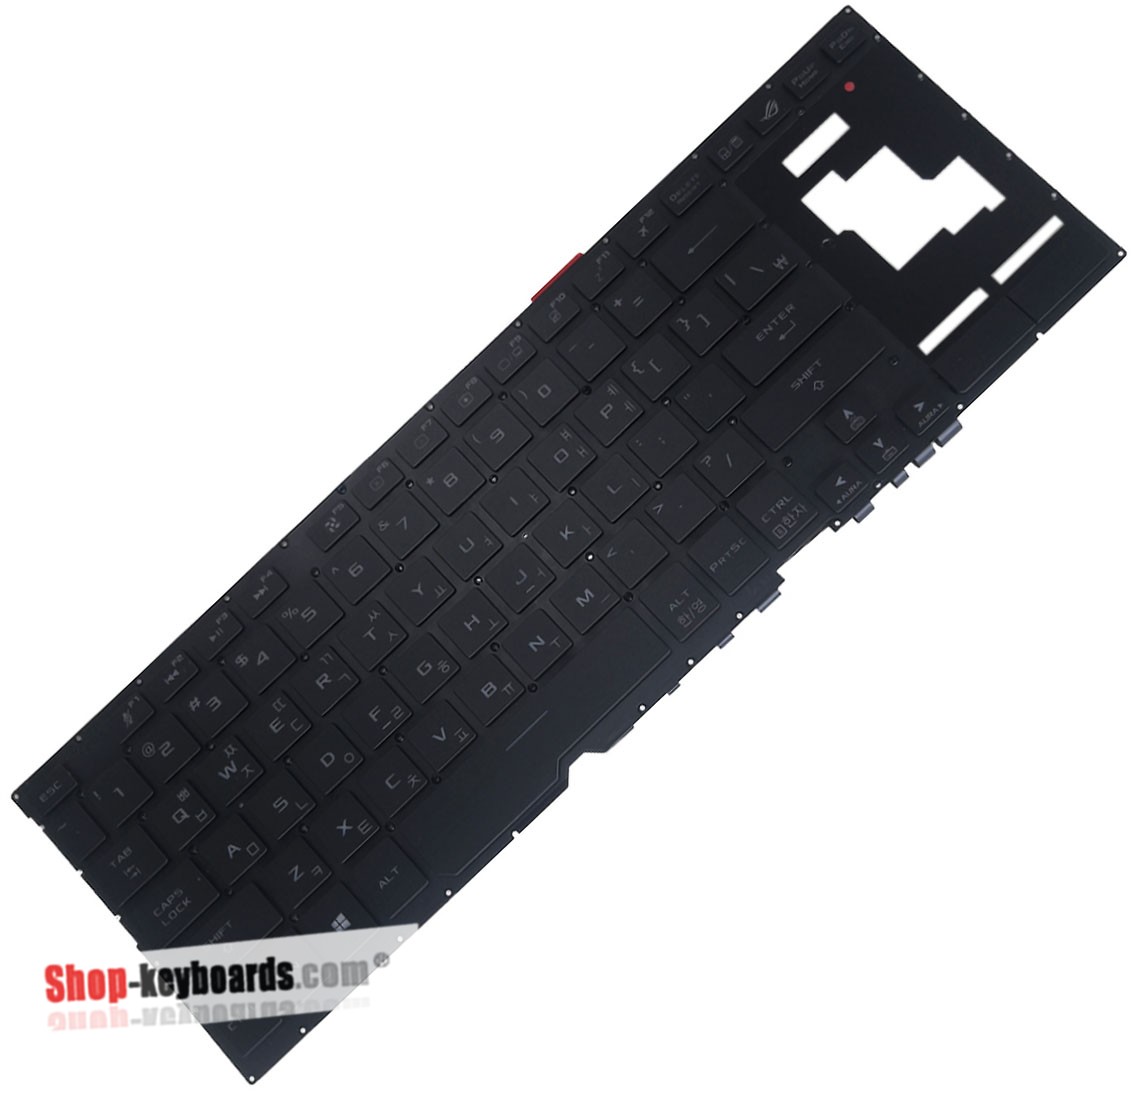 Asus ROG GX701LXS-HG057T  Keyboard replacement